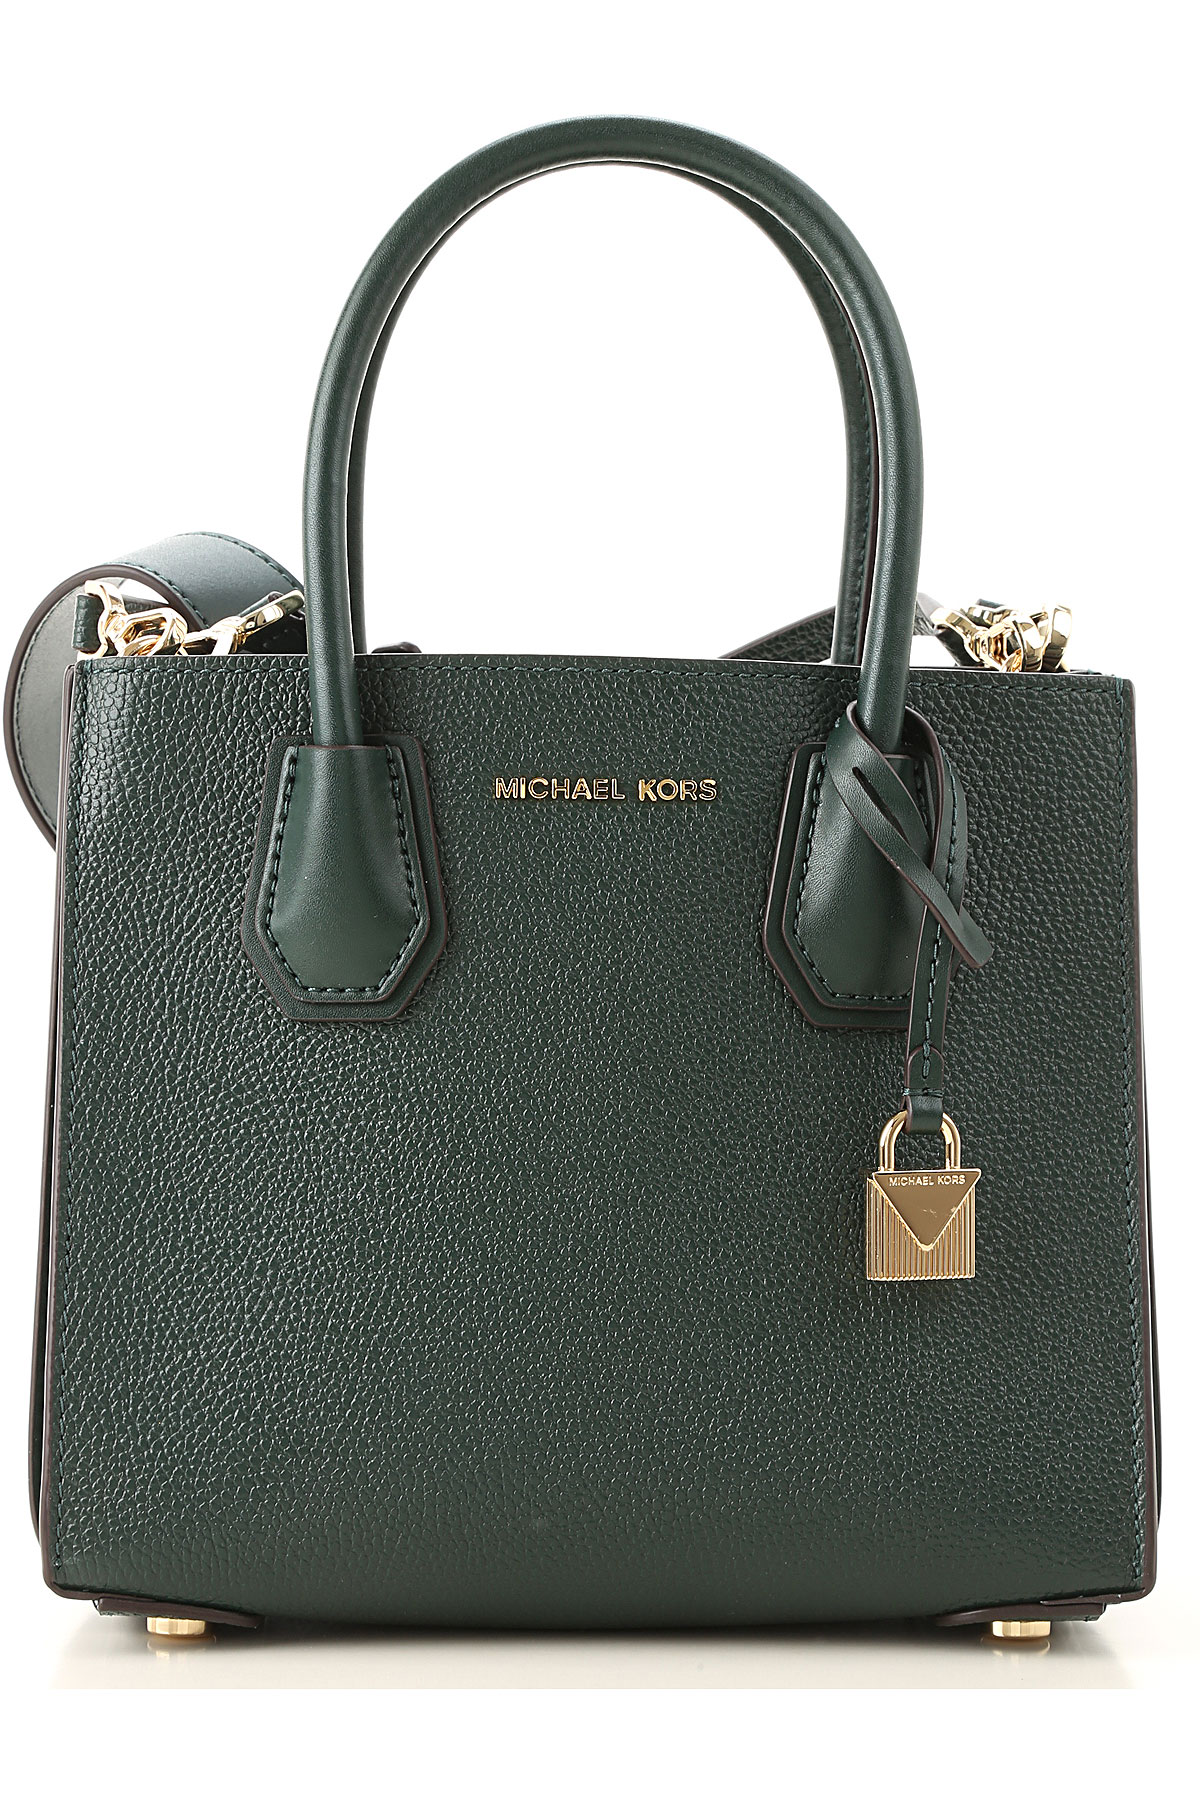 Handbags Michael Kors, Style code 30f8gm9m2t305